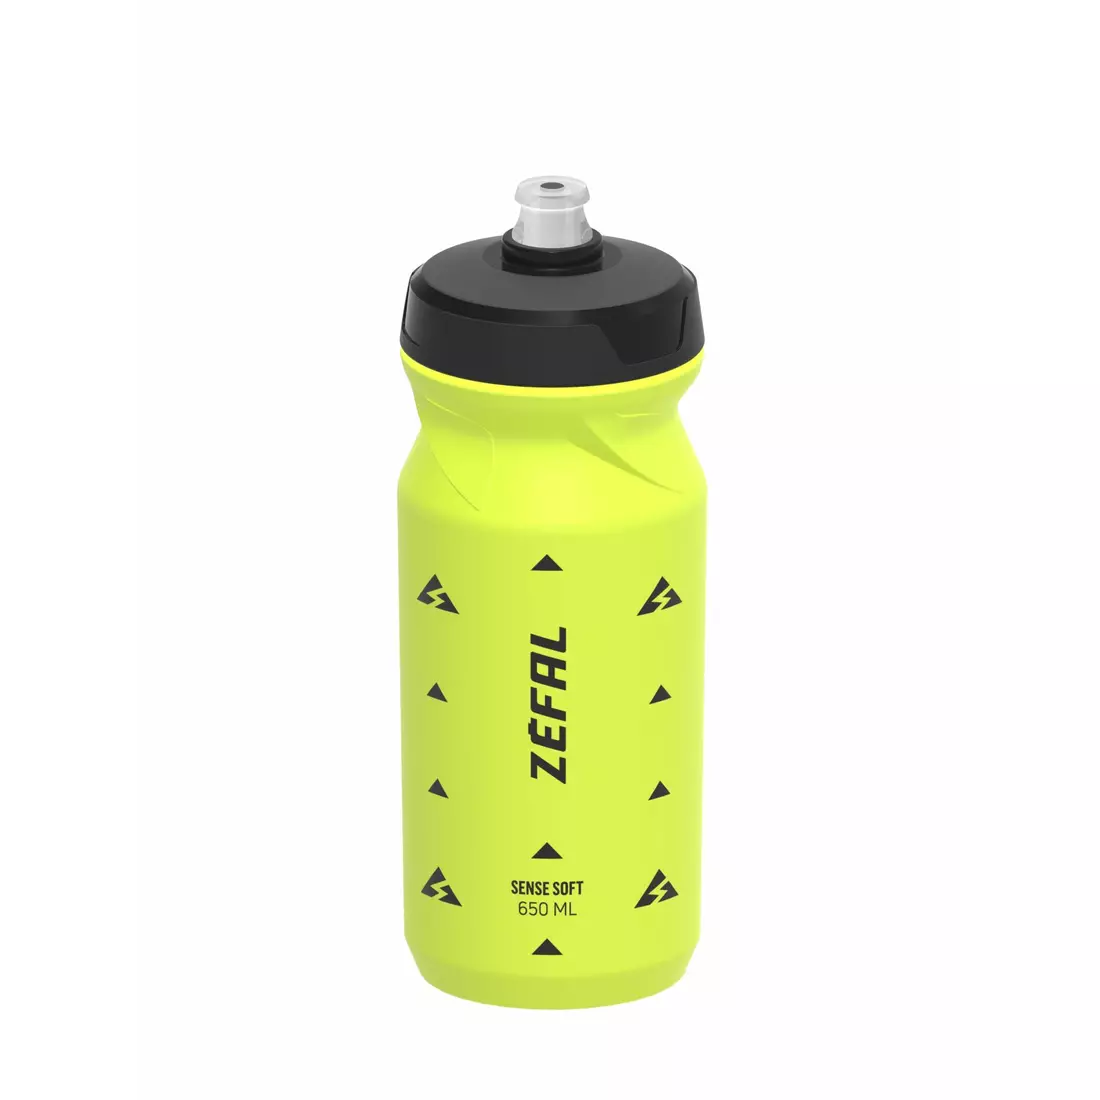 https://www.mikesport.eu/img/imagecache/58001-59000/product-media/ZEFAL-SENSE-SOFT-65-bicycle-water-bottle-650-ml-Neon-Yellow-119644-1100x1100.webp